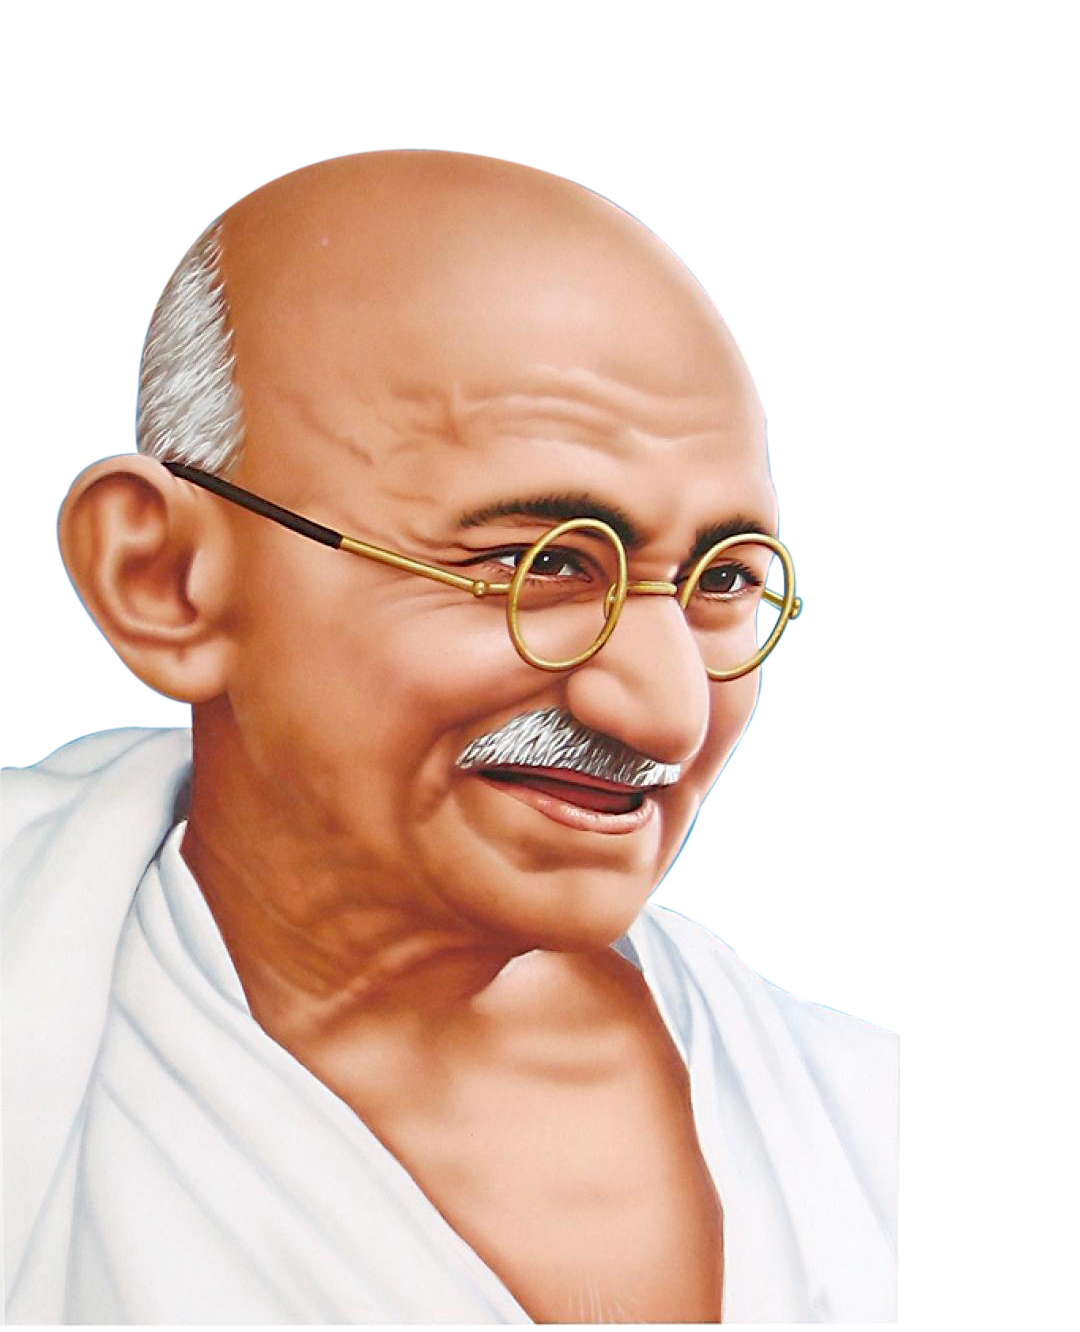 Mahatma Gandhi Transparent Background